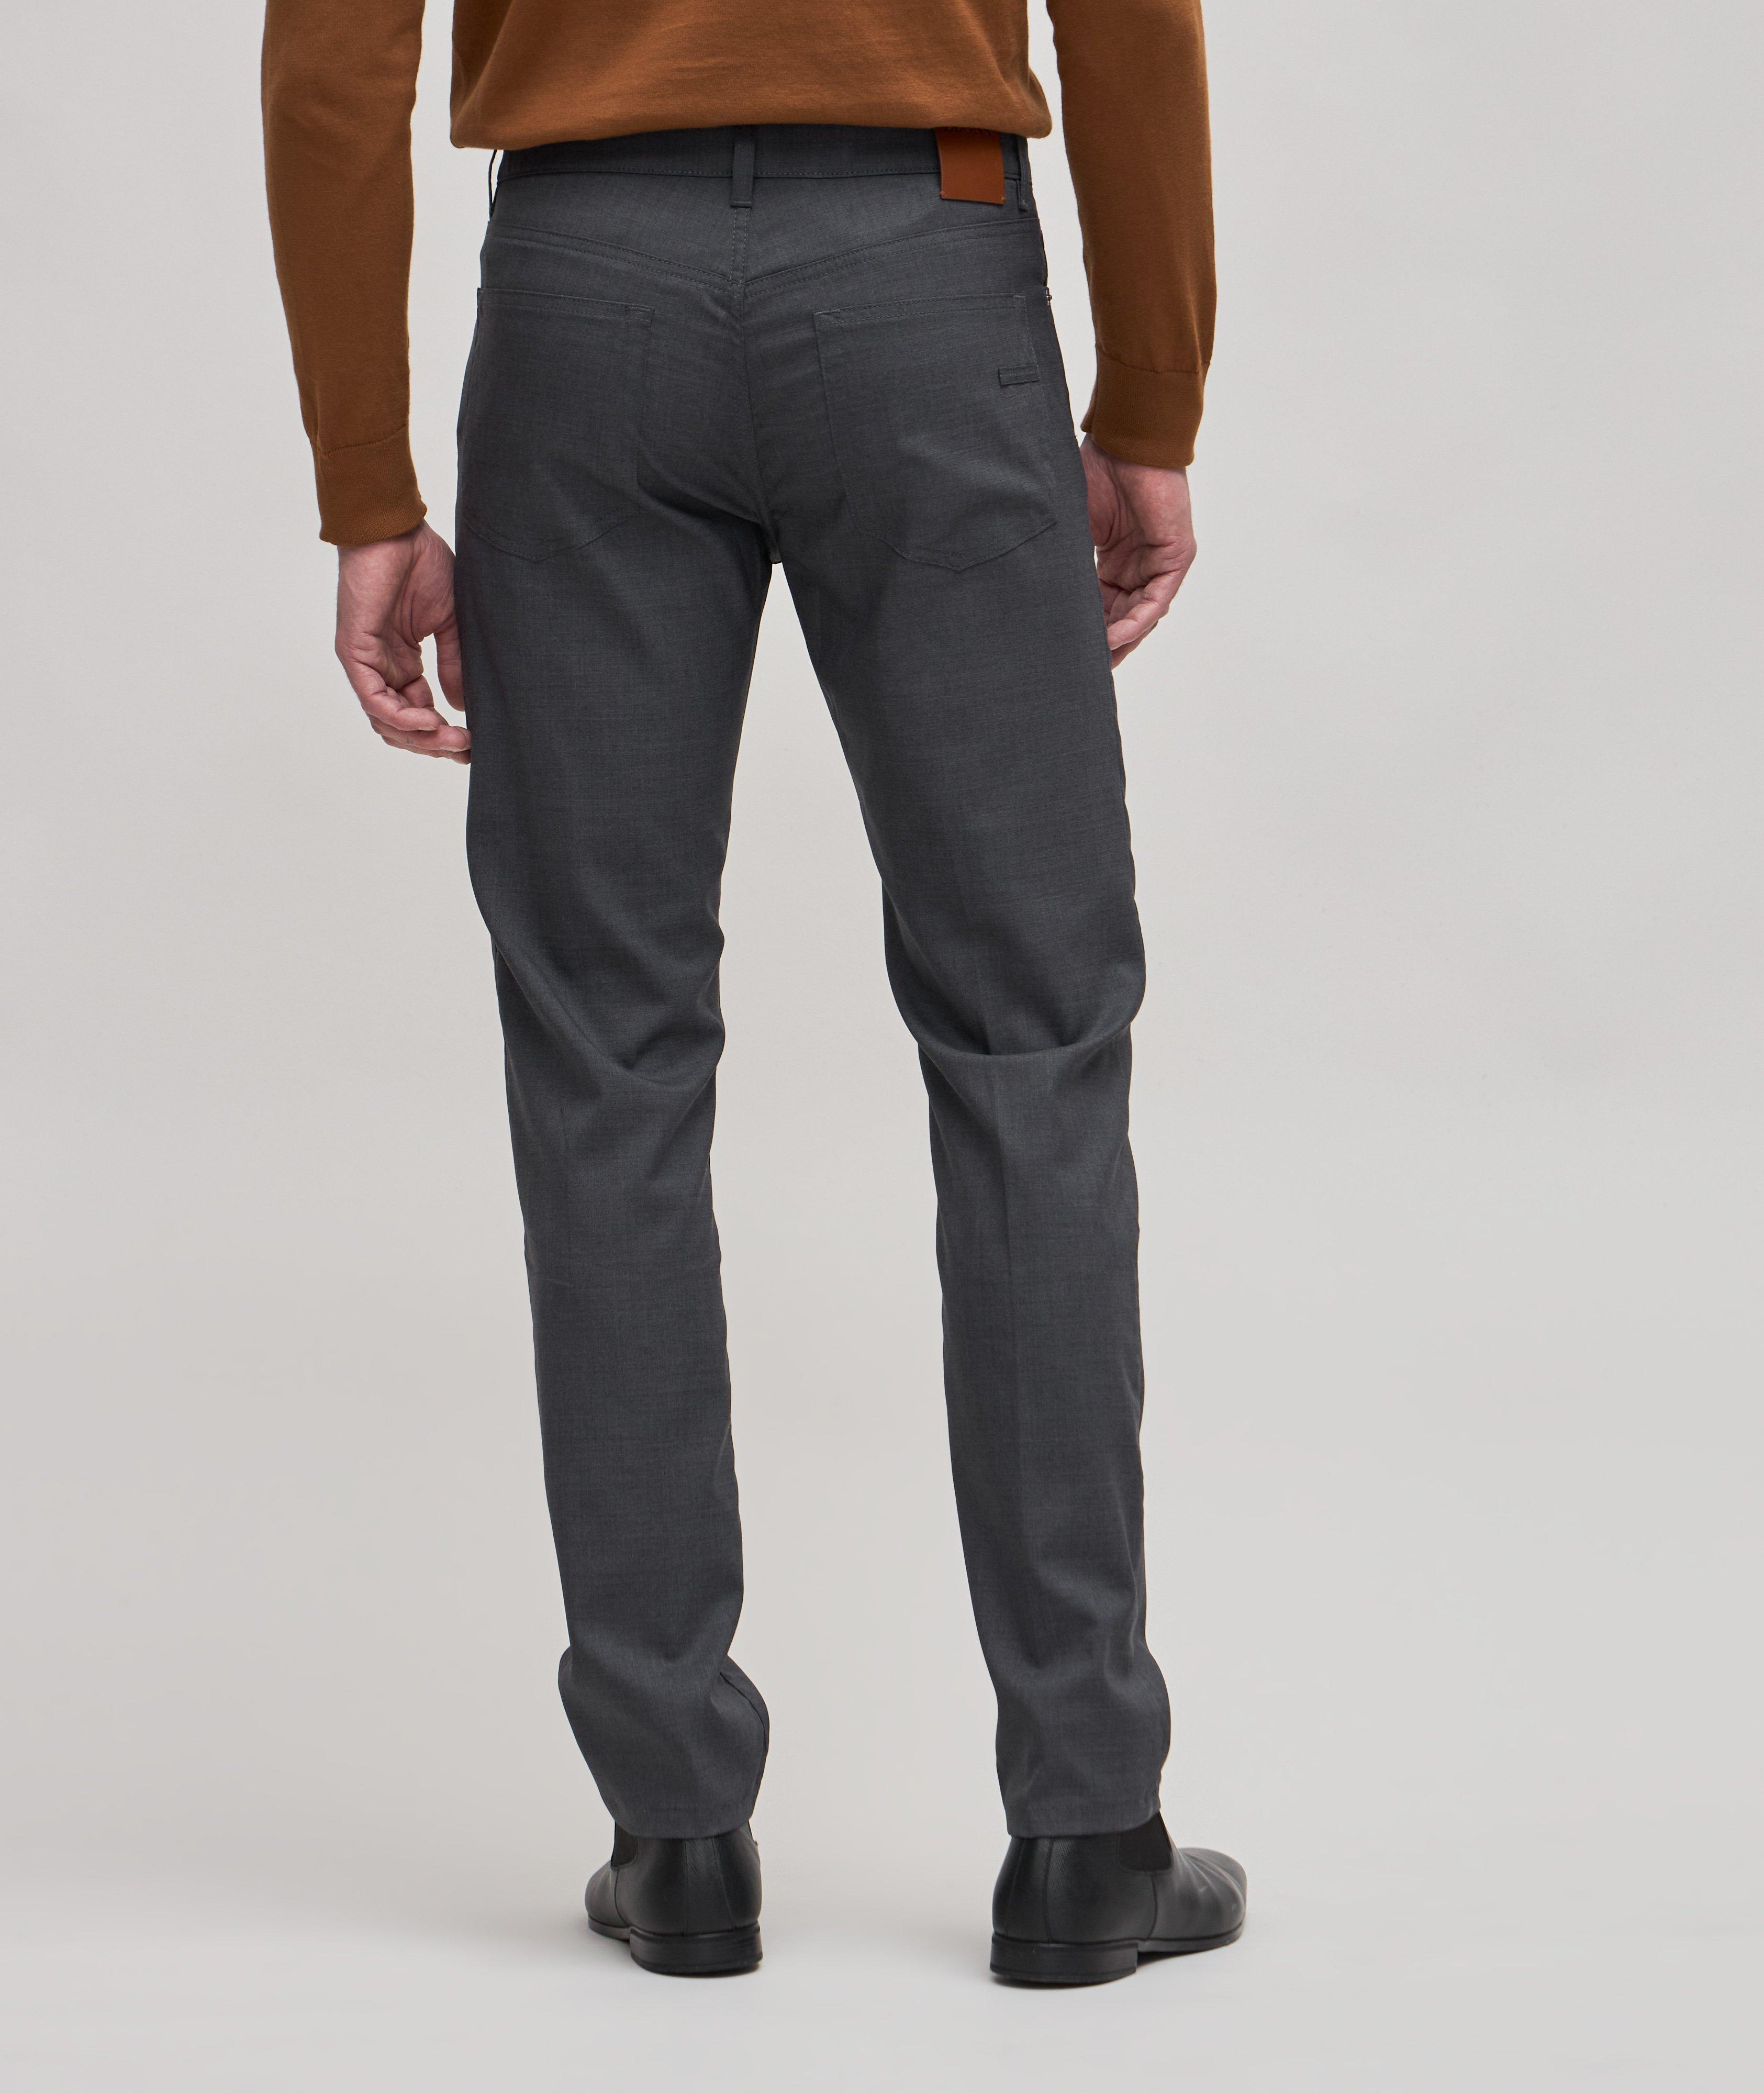 Zegna City Solid Wool Five-Pocket Pants, Pants